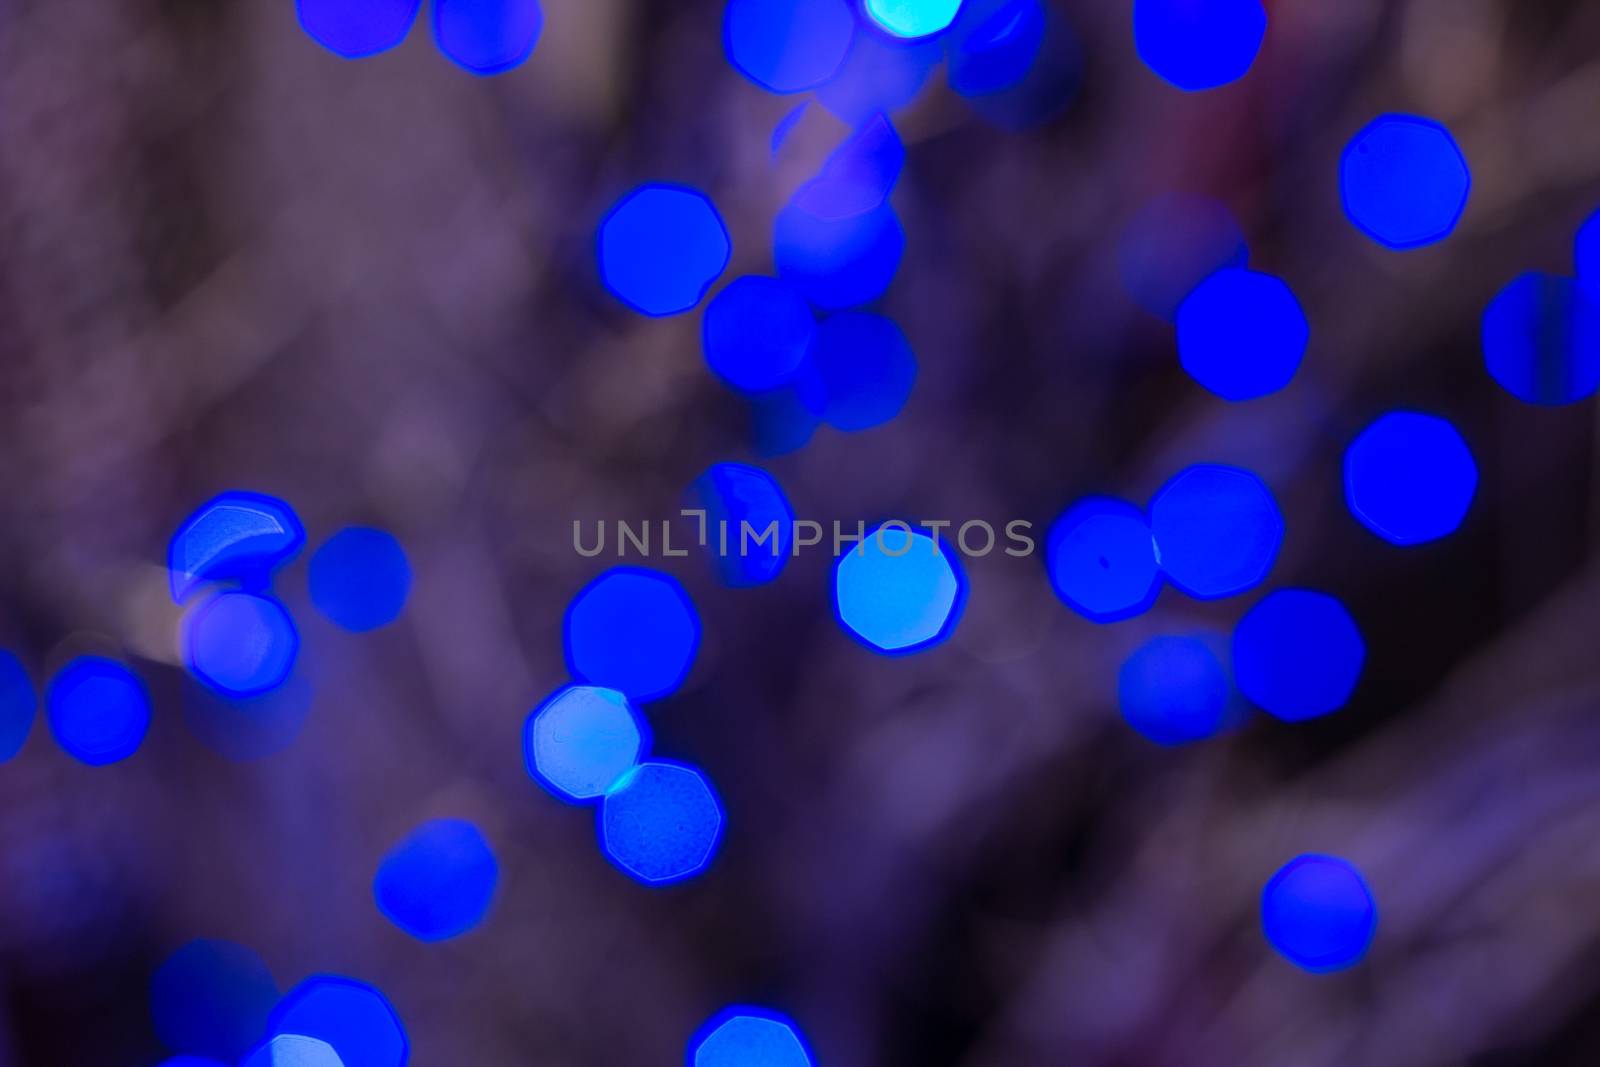 The blue lights by alanstix64